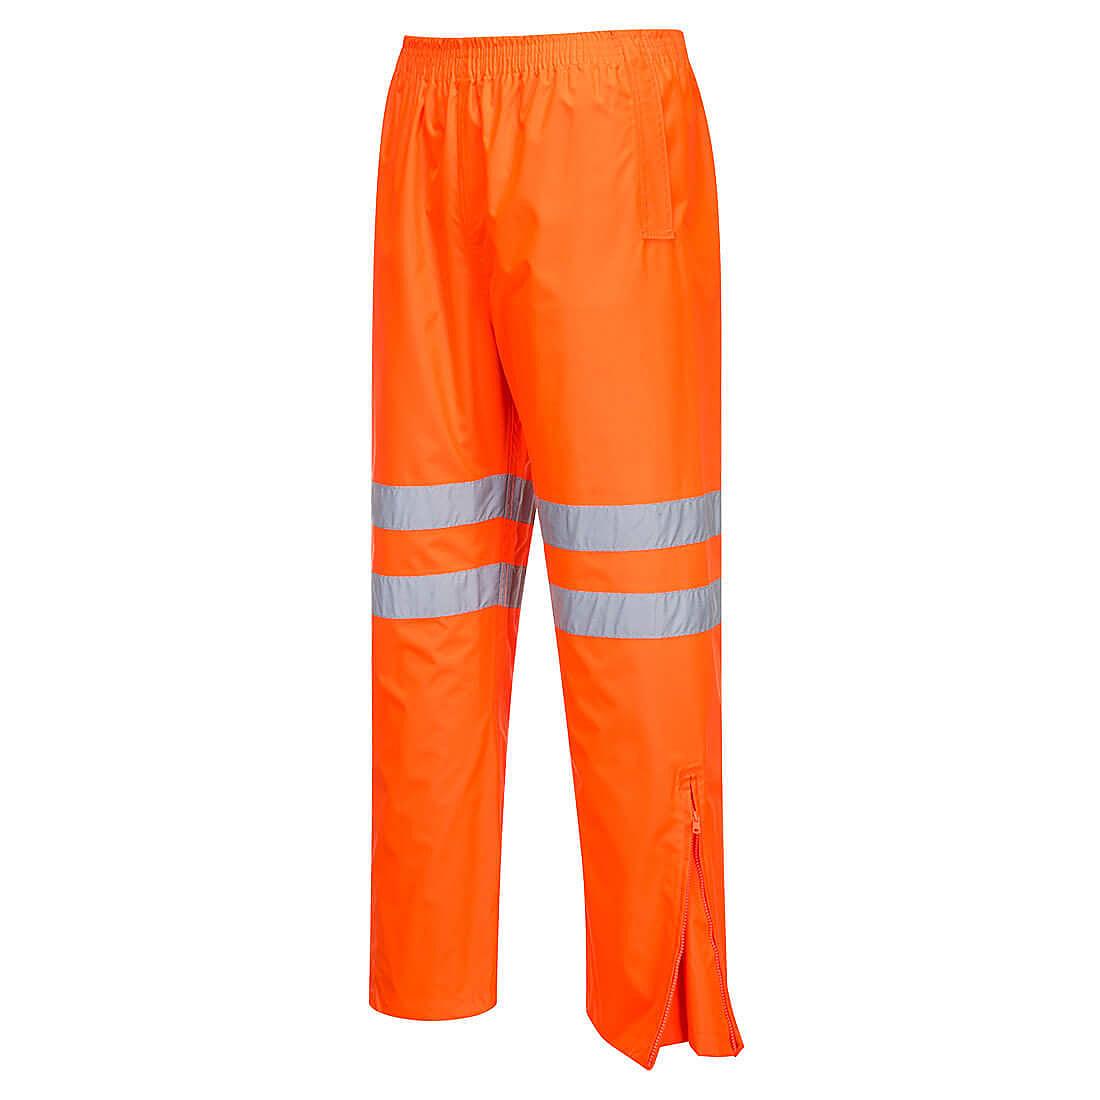 Portwest Hi-Viz Traffic Trousers - RIS in Orange (Product Code: RT31)